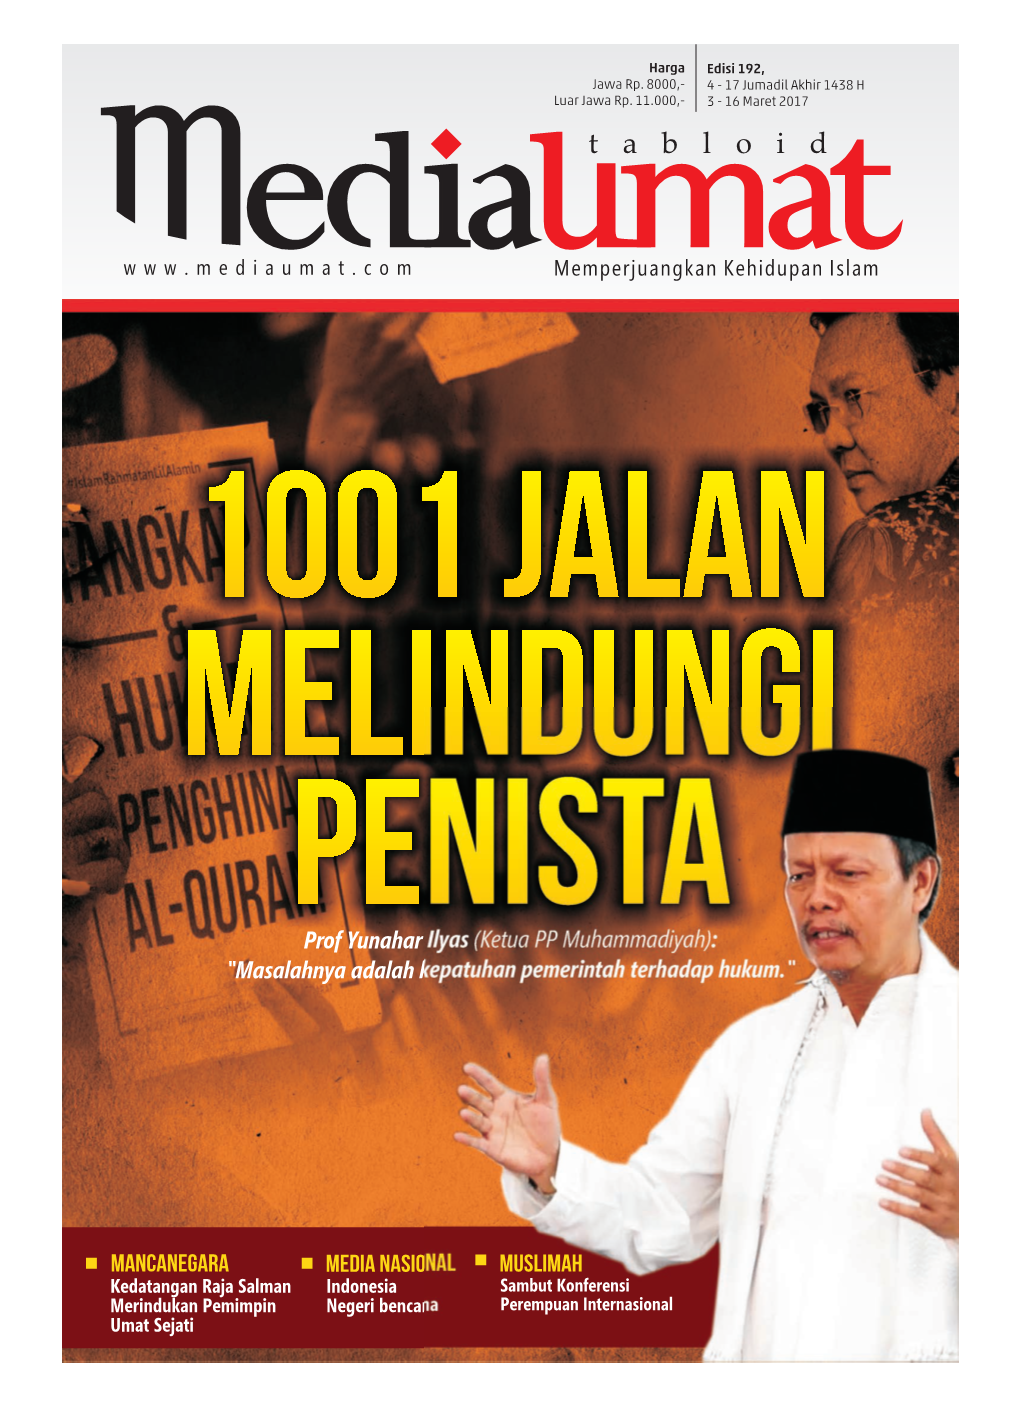 Ketua PP Muhammadiyah): "Masalahnya Adalah Kepatuhan Pemerintah Terhadap Hukum."